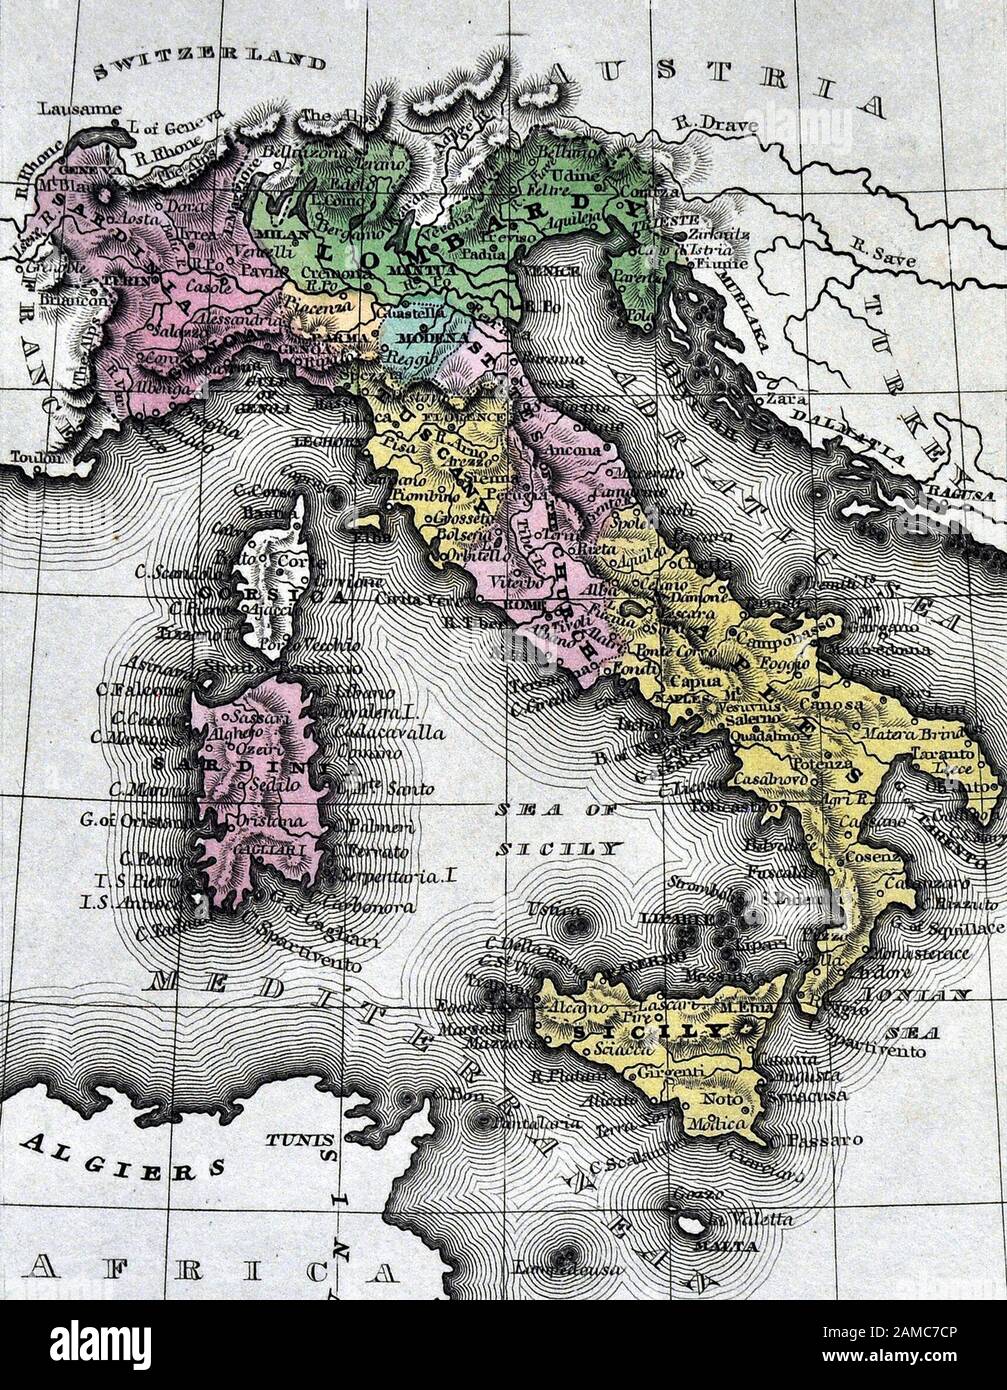 1834 Carey Map of Italy Rome Florence Naples Venice Sicily Stock Photo